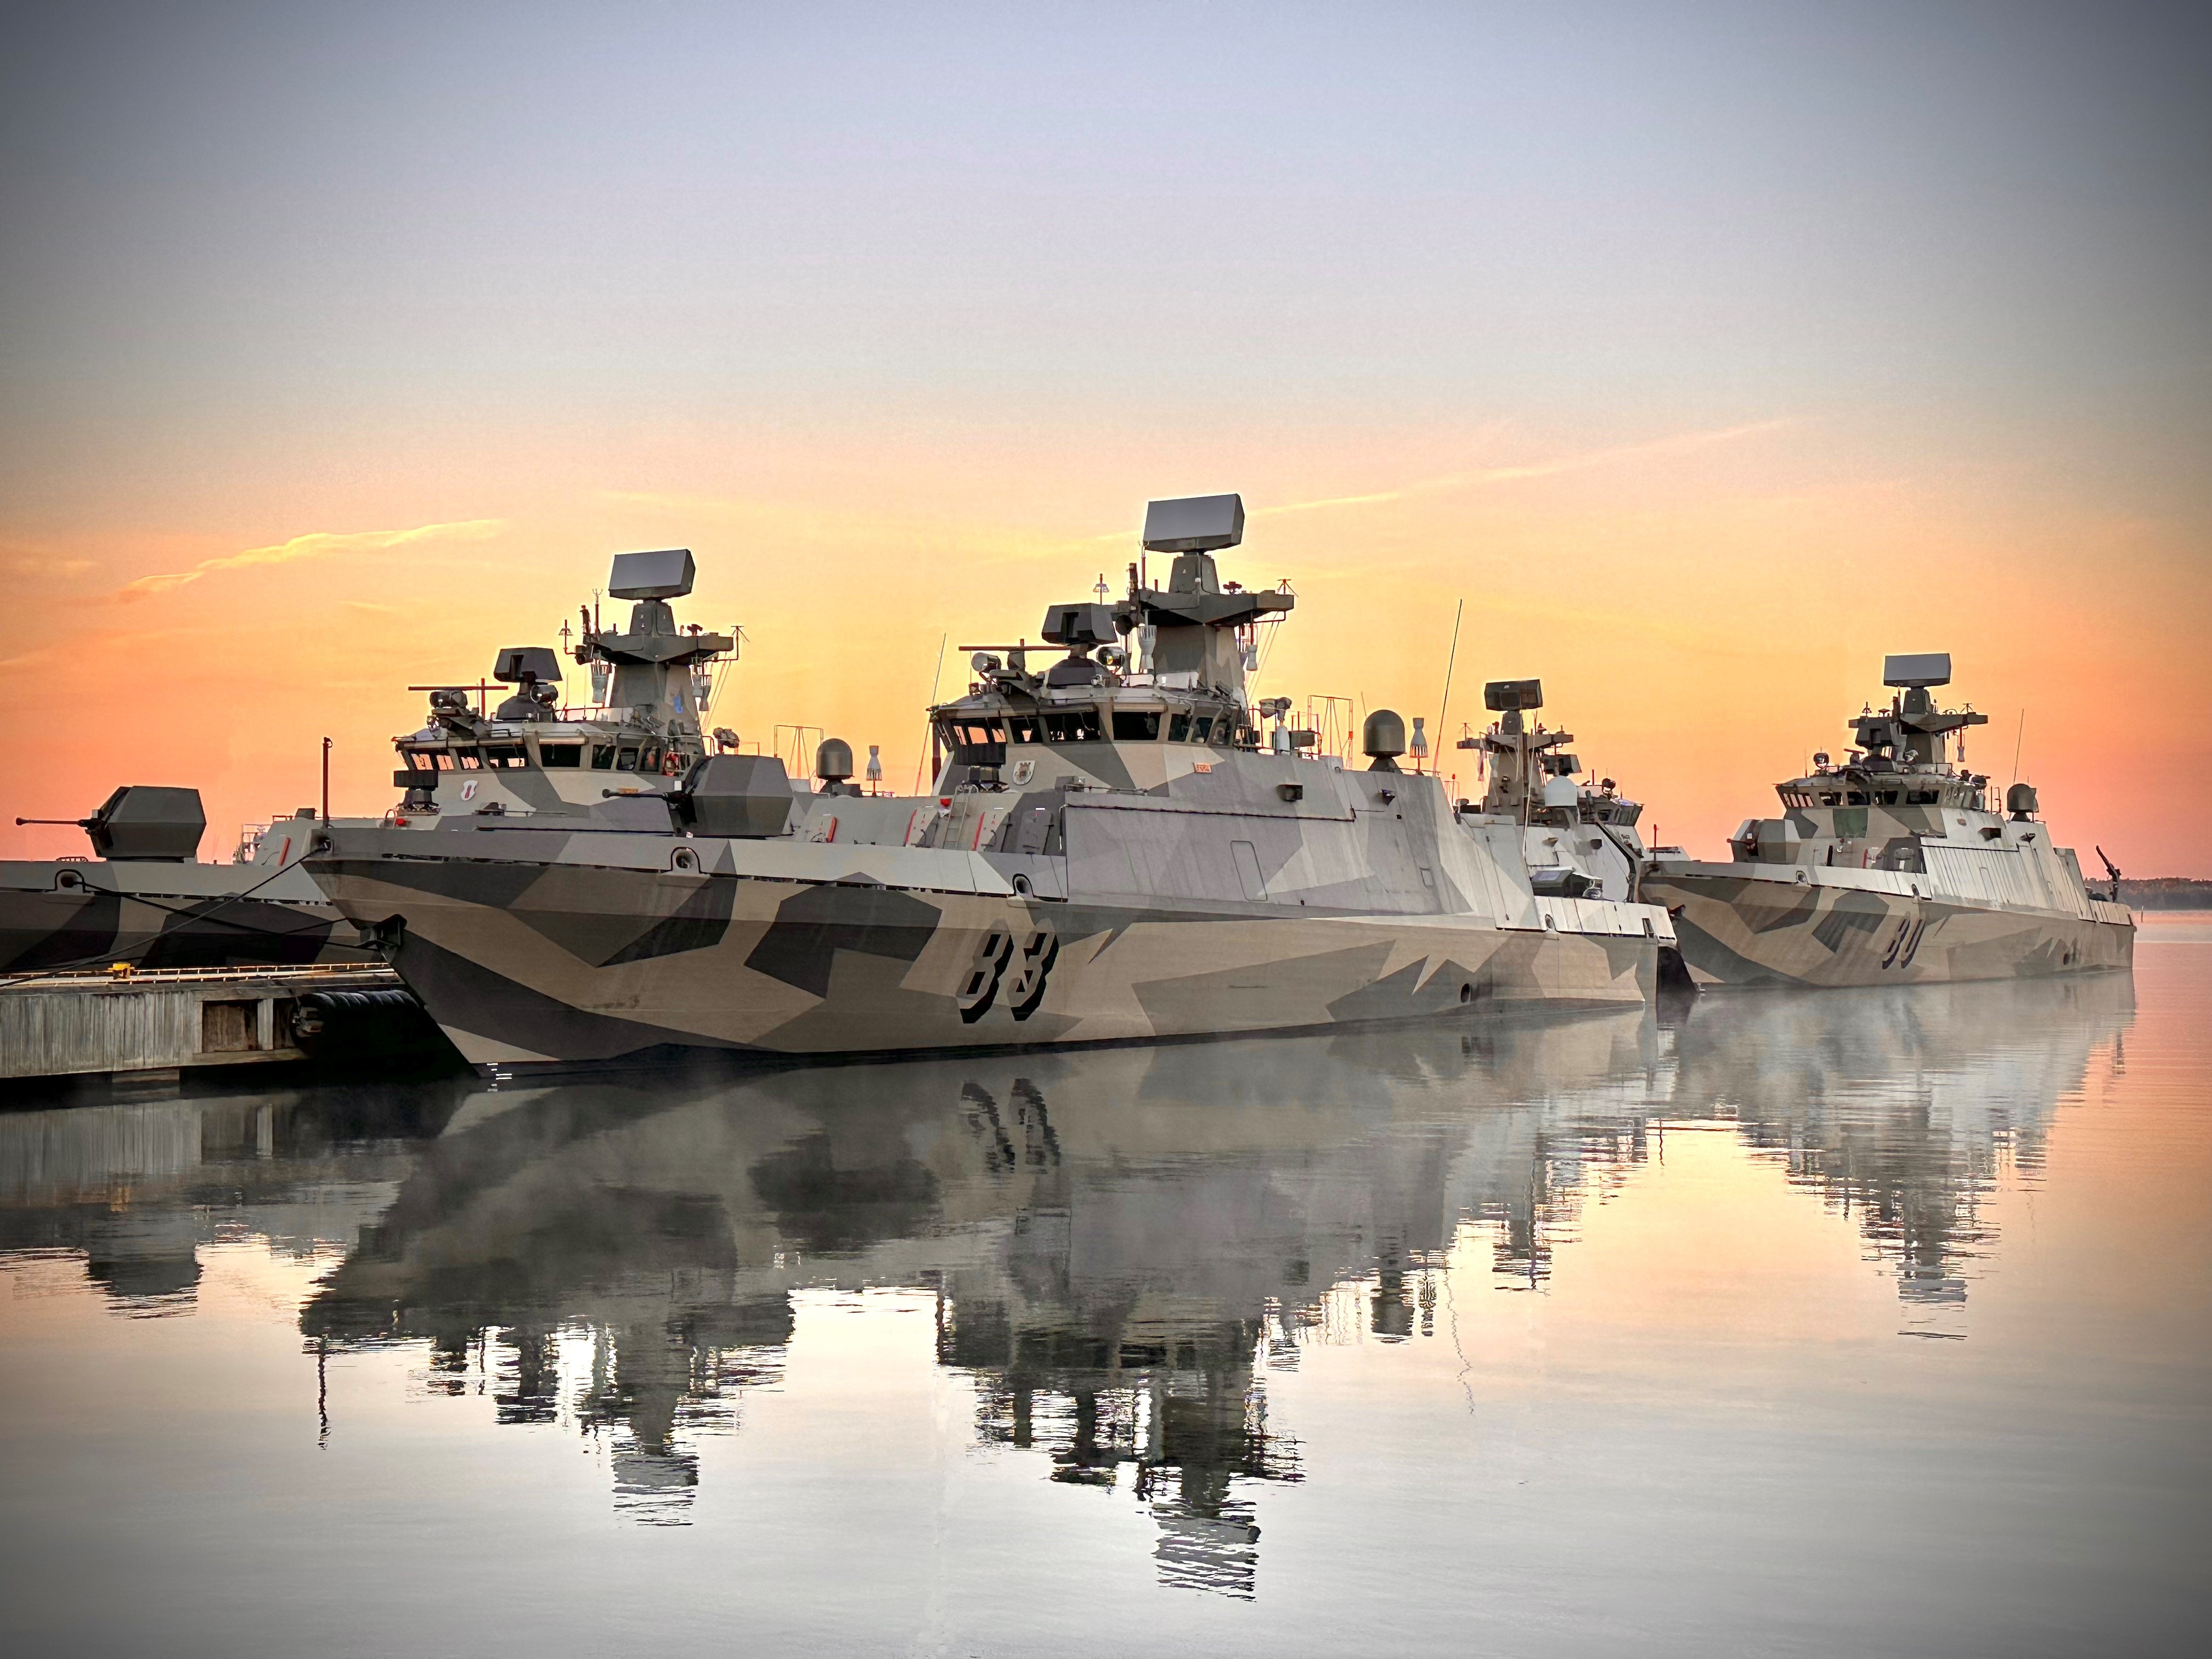 Four Hamina-class missile boats